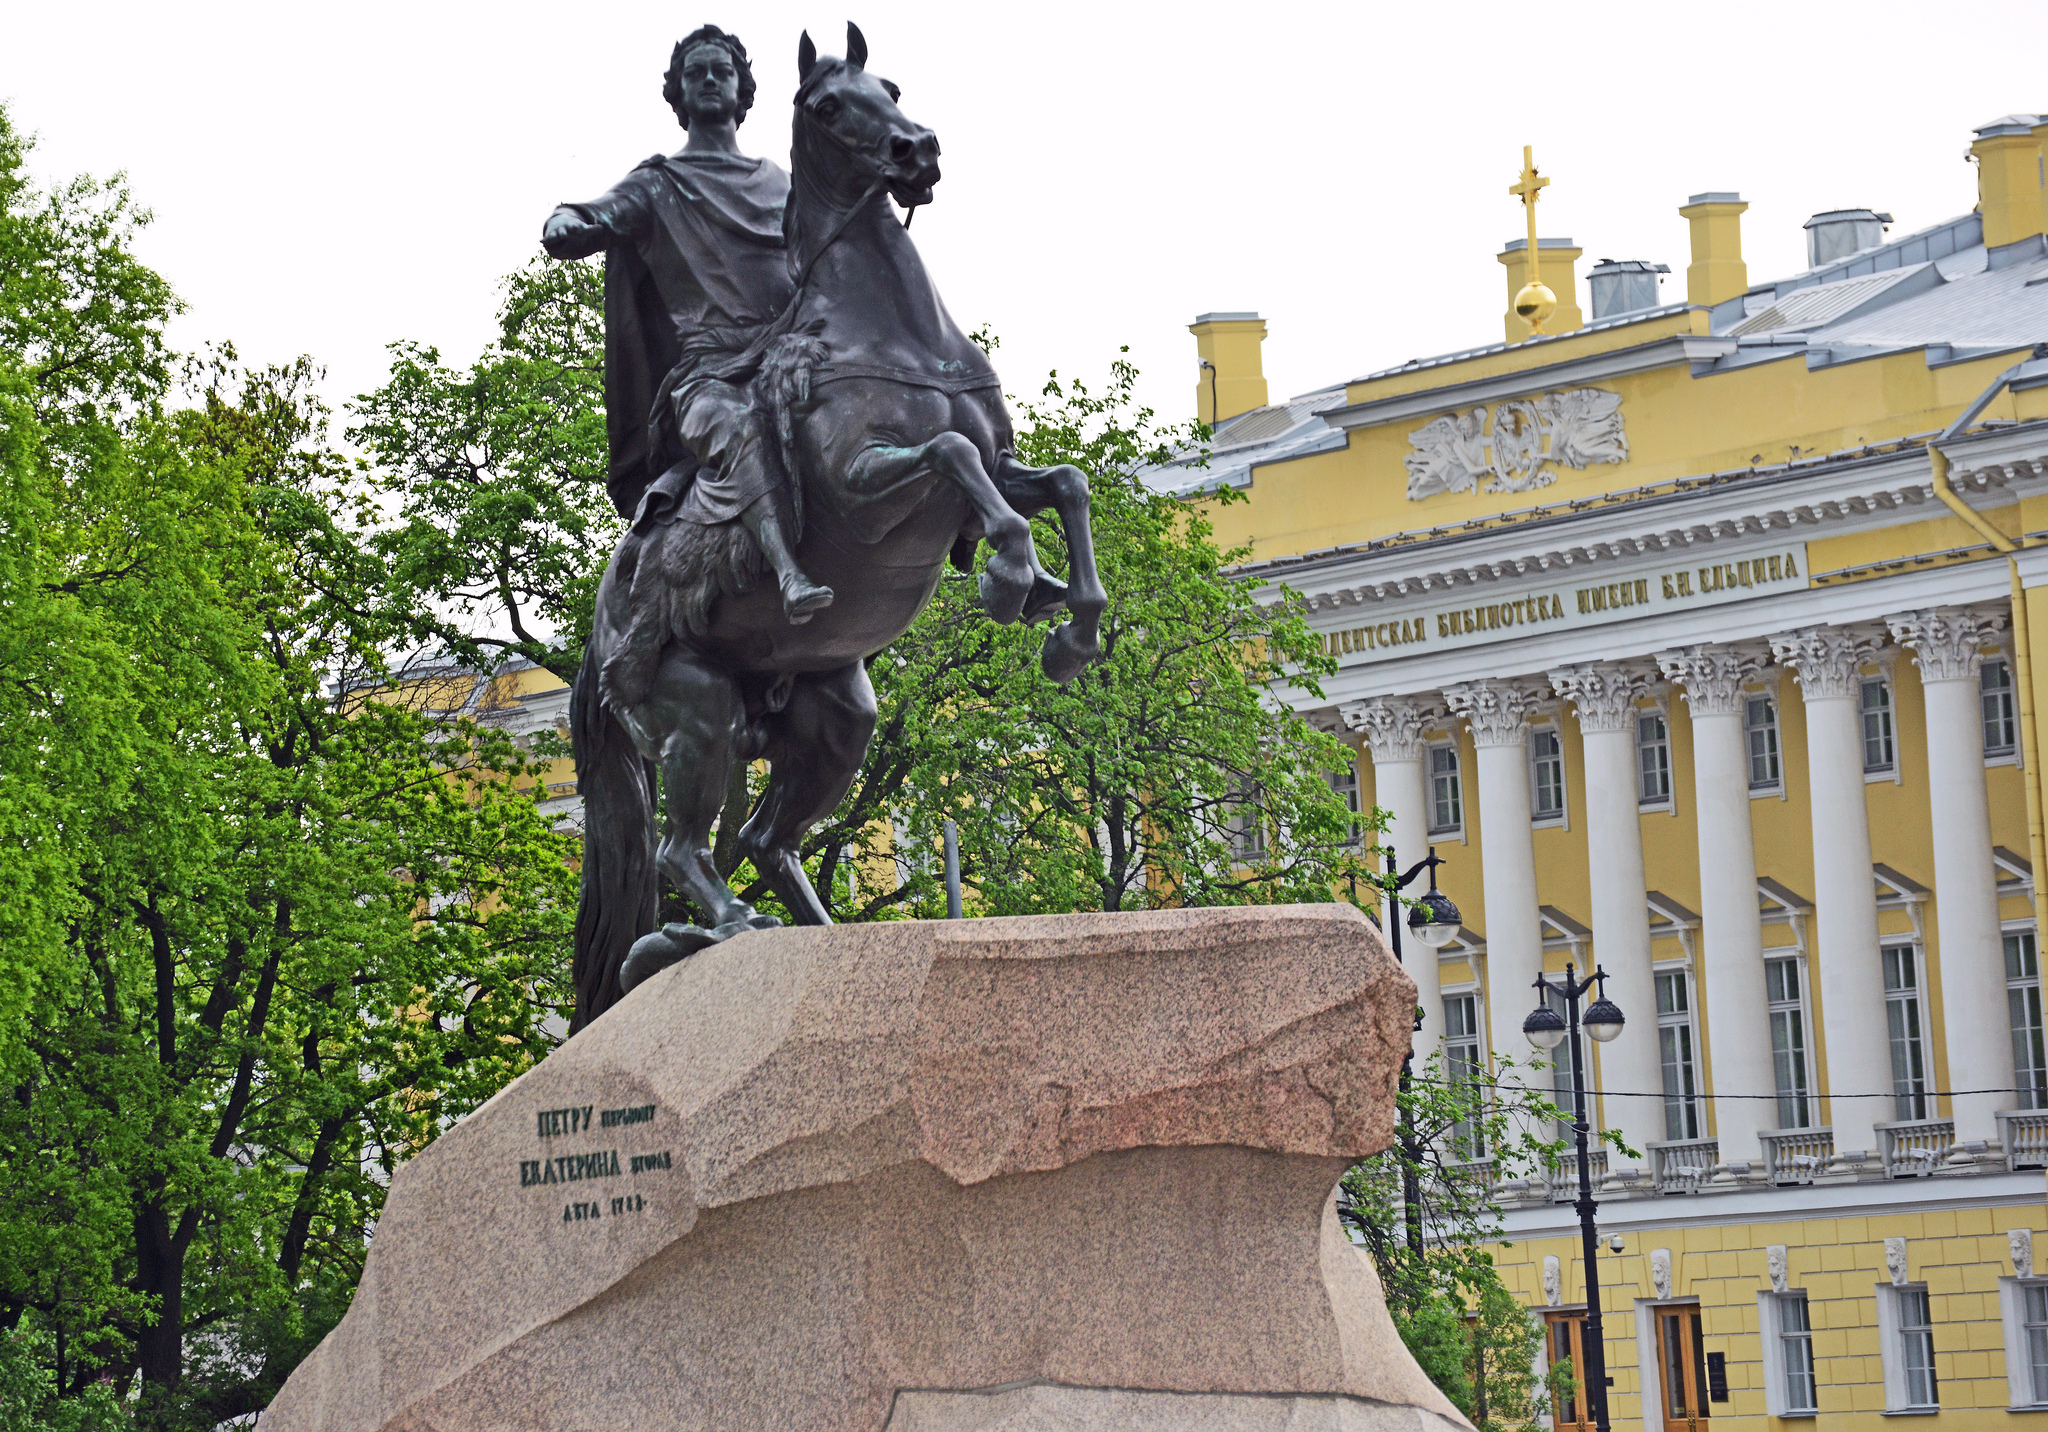 St Petersburg's <em>The Bronze Horseman</em>. Photograph: Harvey Barrison under a CC licence